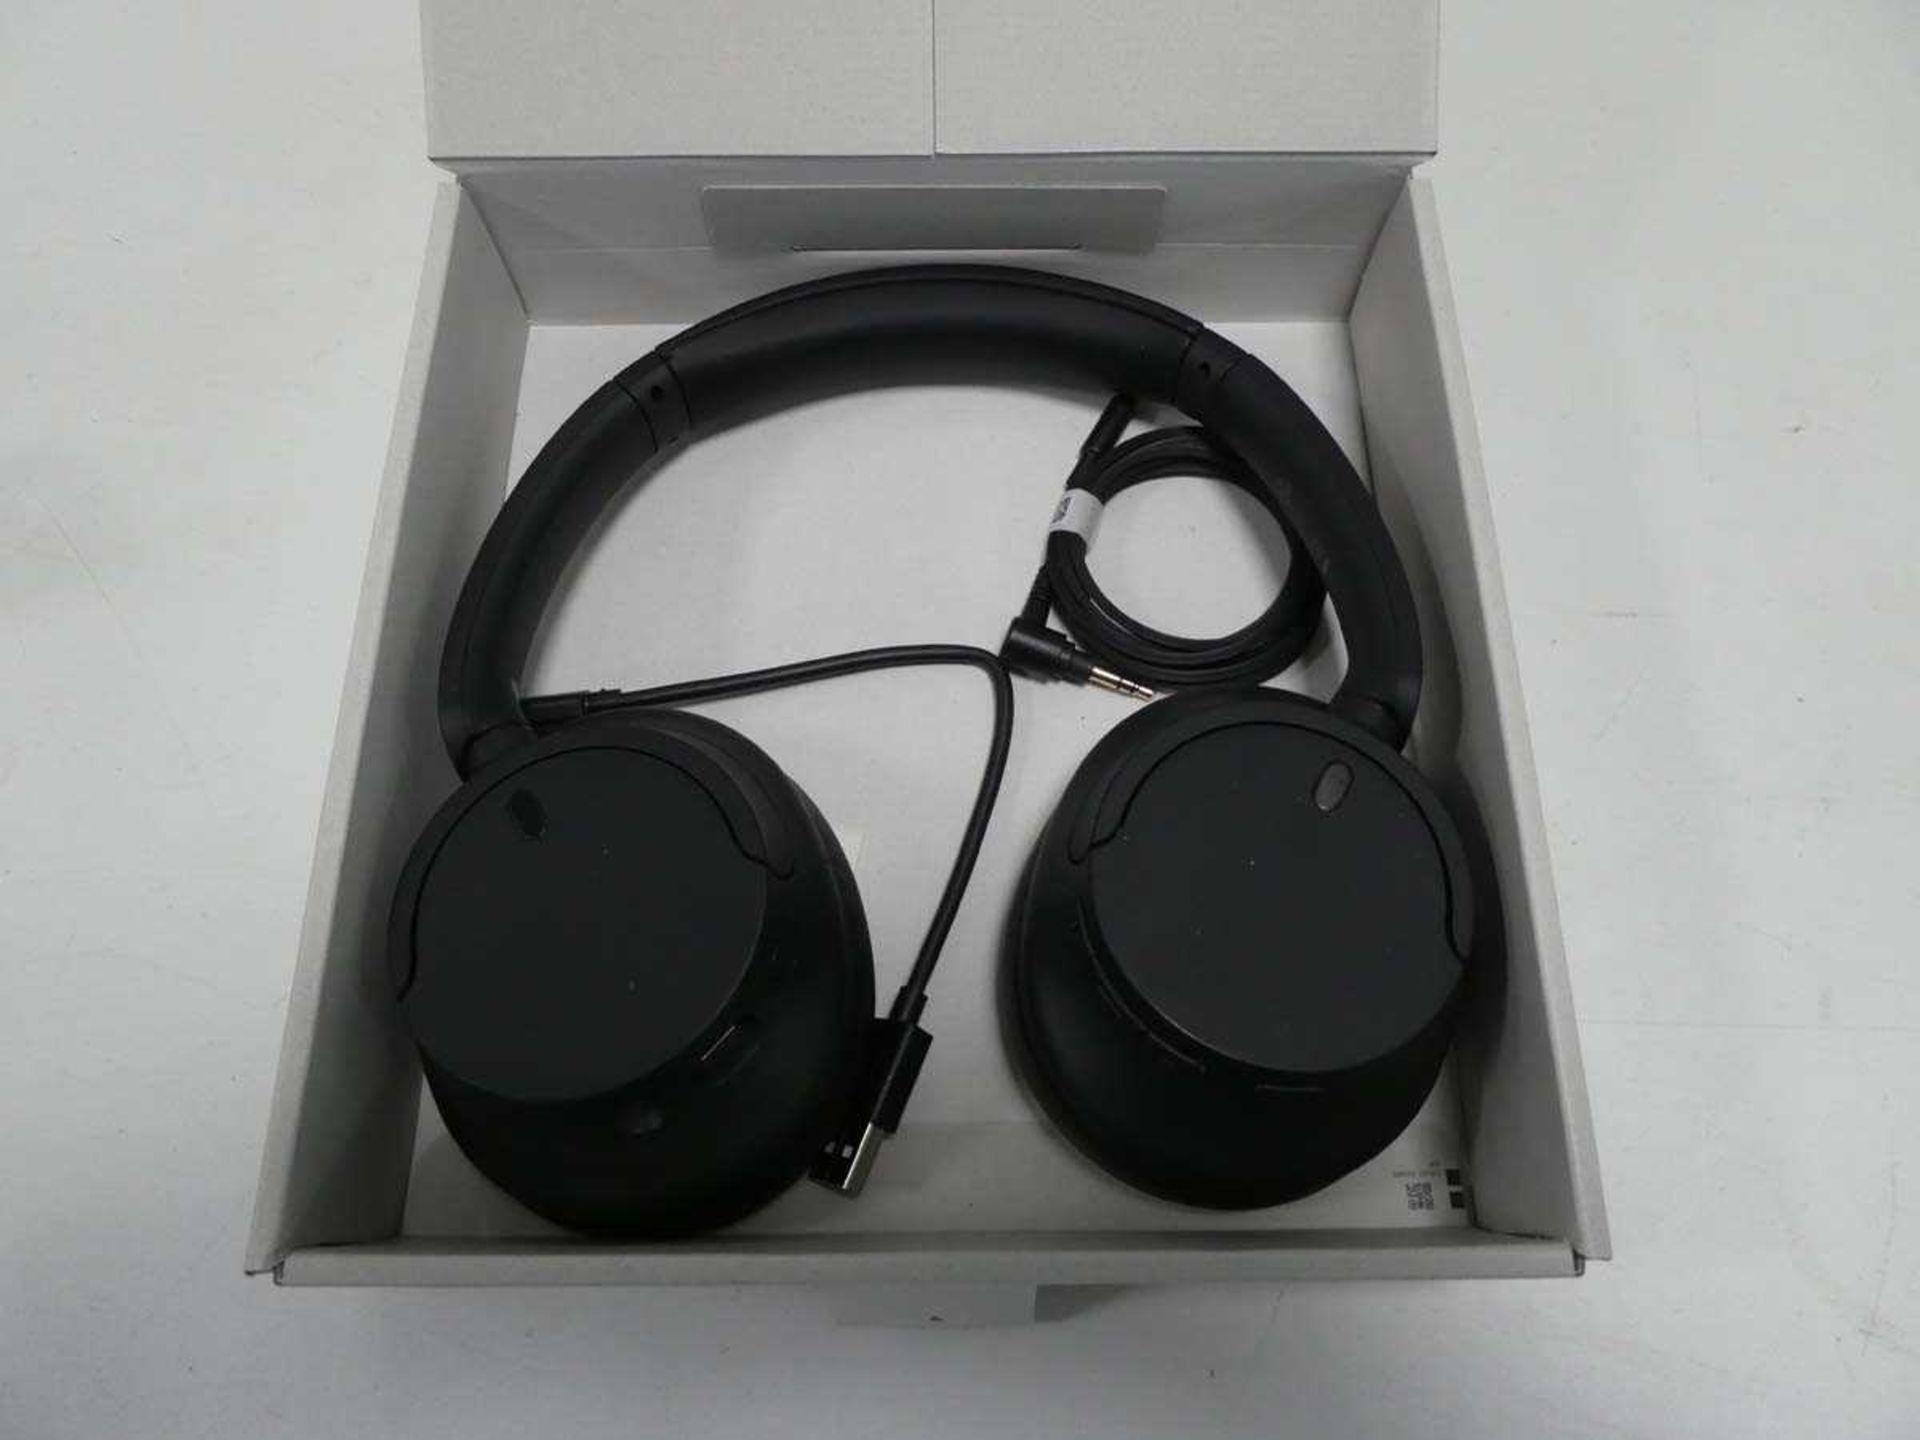 Pair of Sony WHCH720N noise cancelling headphones